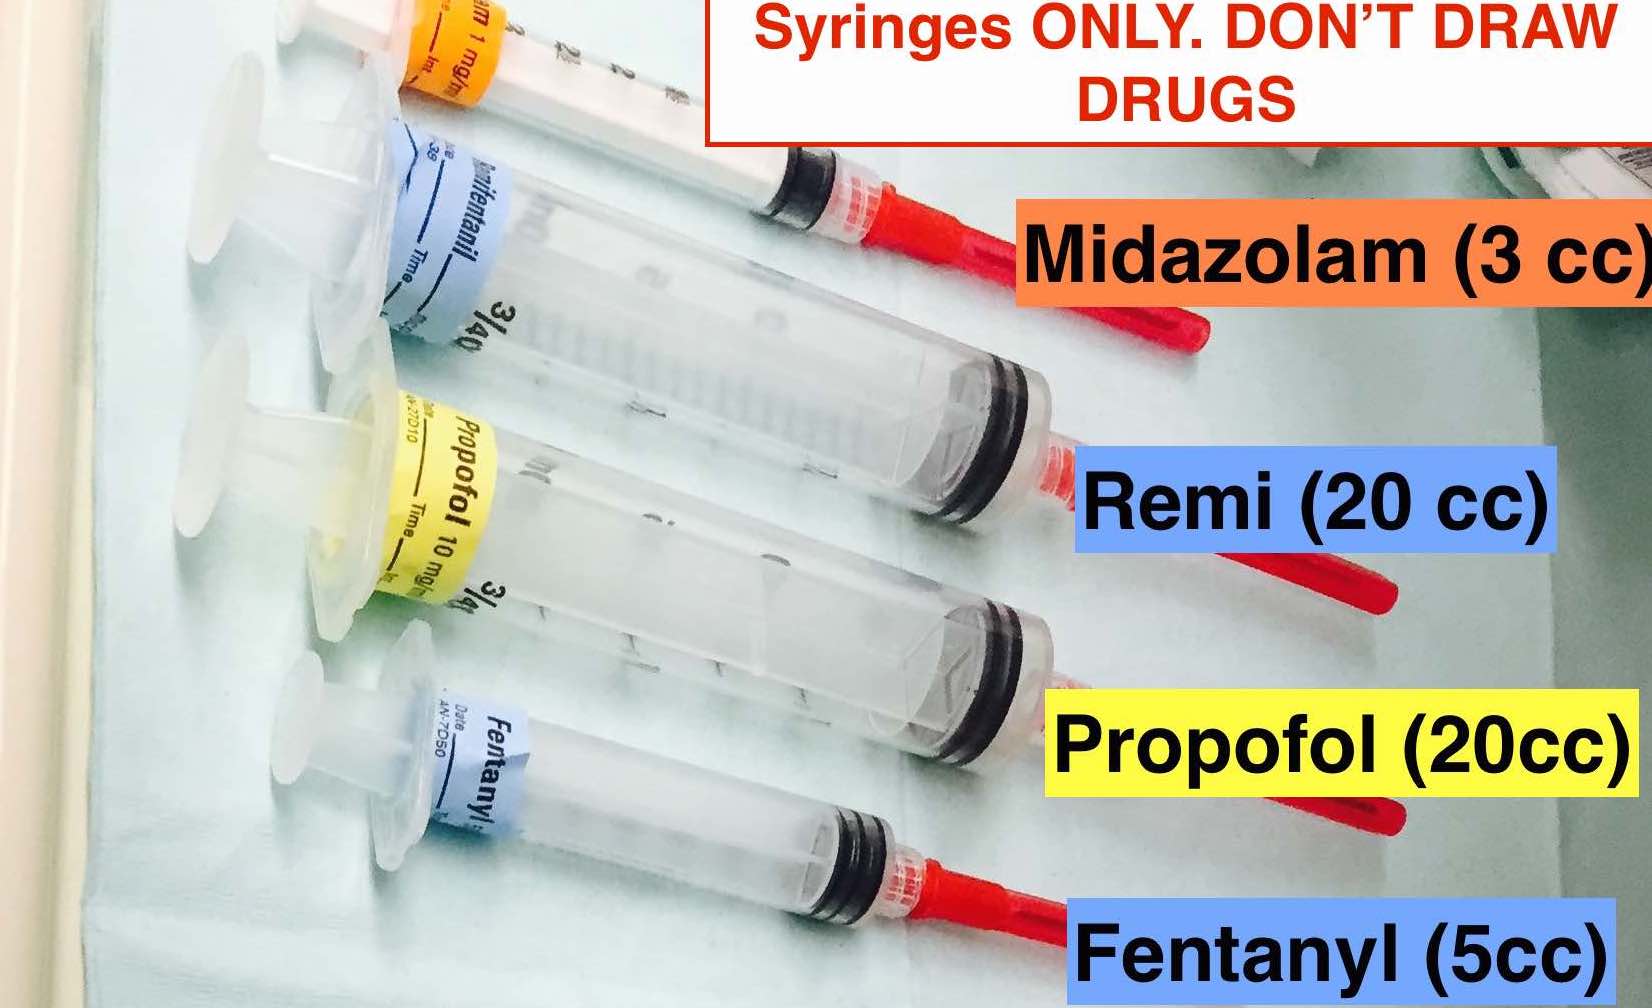 Syringes-no-drugs